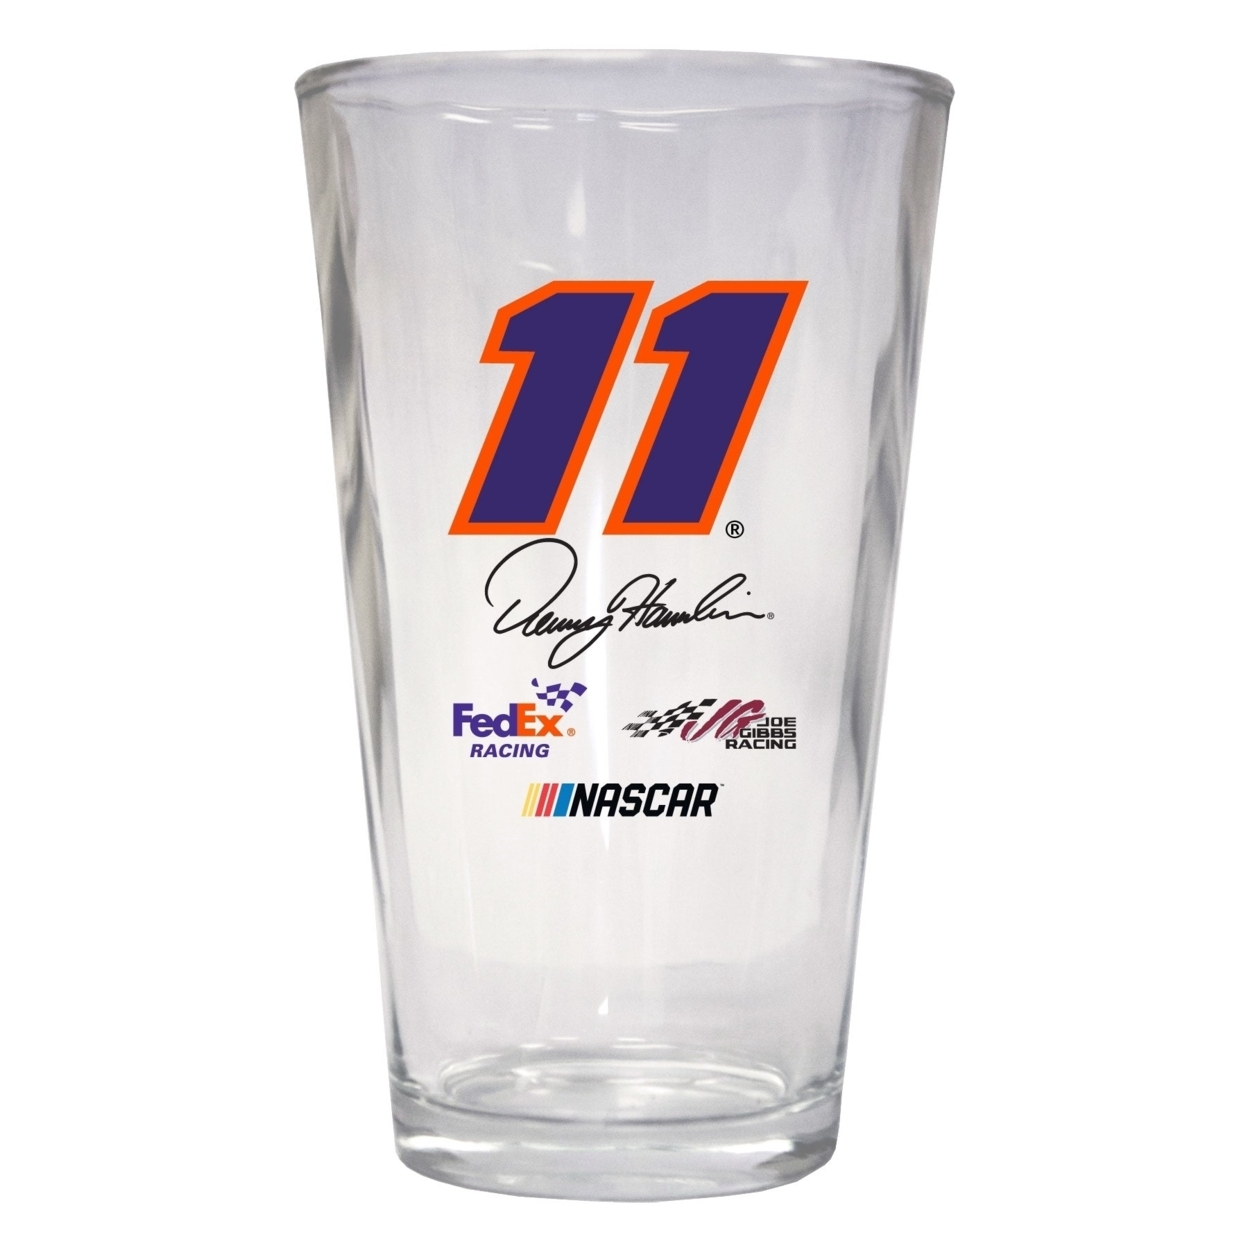 Denny Hamlin #11 NASCAR Pint Glass New For 2020